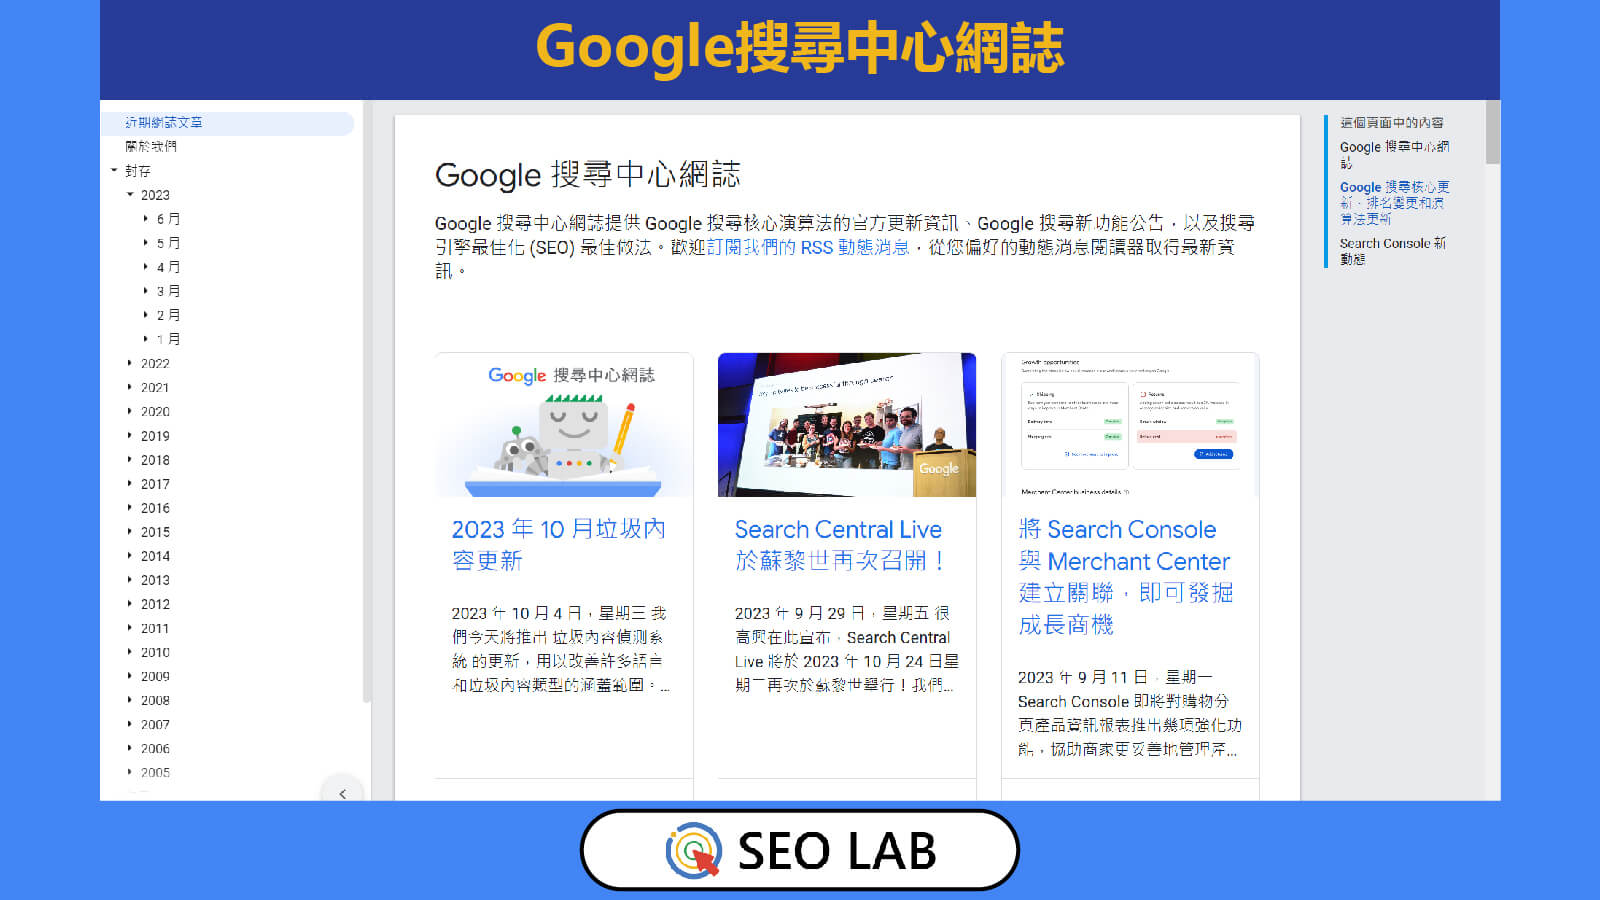 Google搜尋中心網誌：SEO演算法消息網站